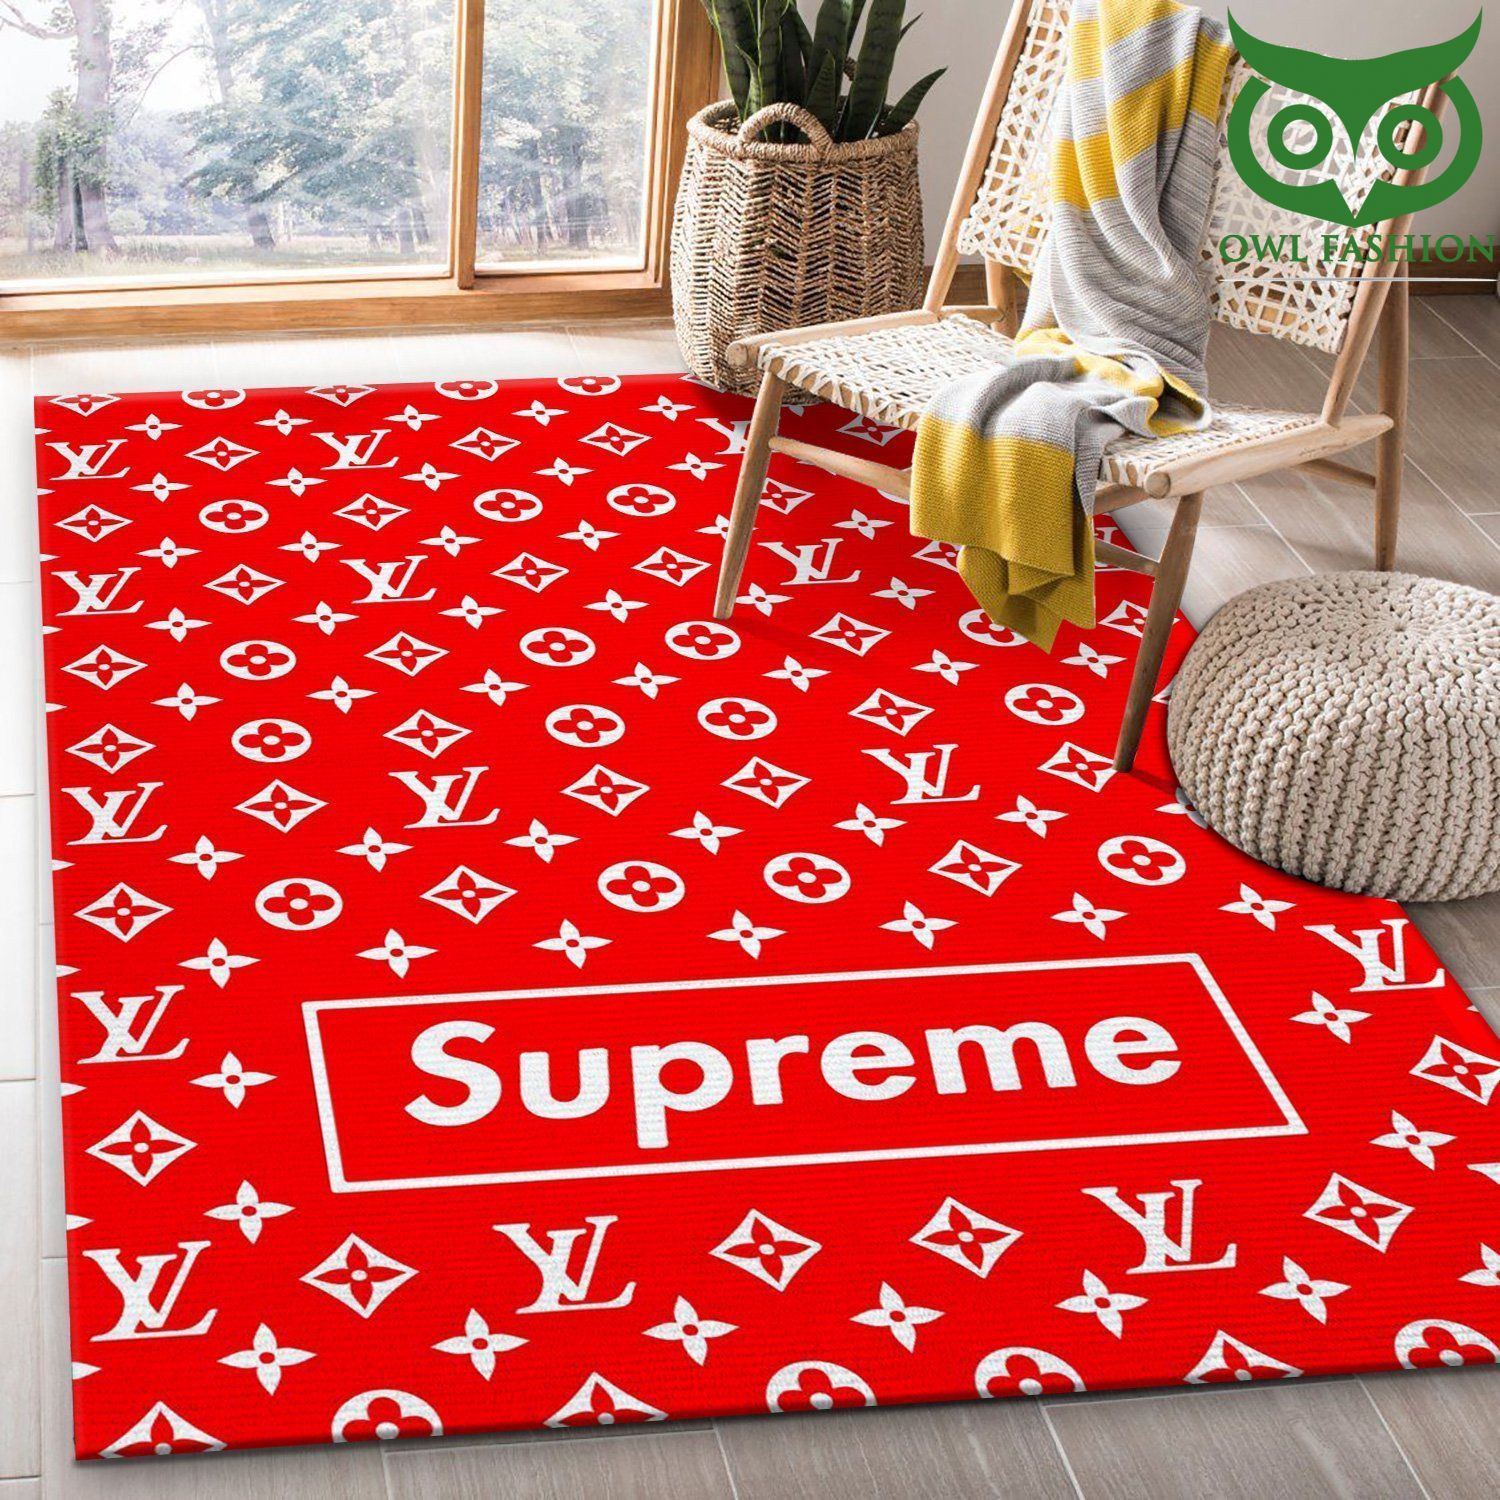 69 Supreme Lv Red Carpet Rug